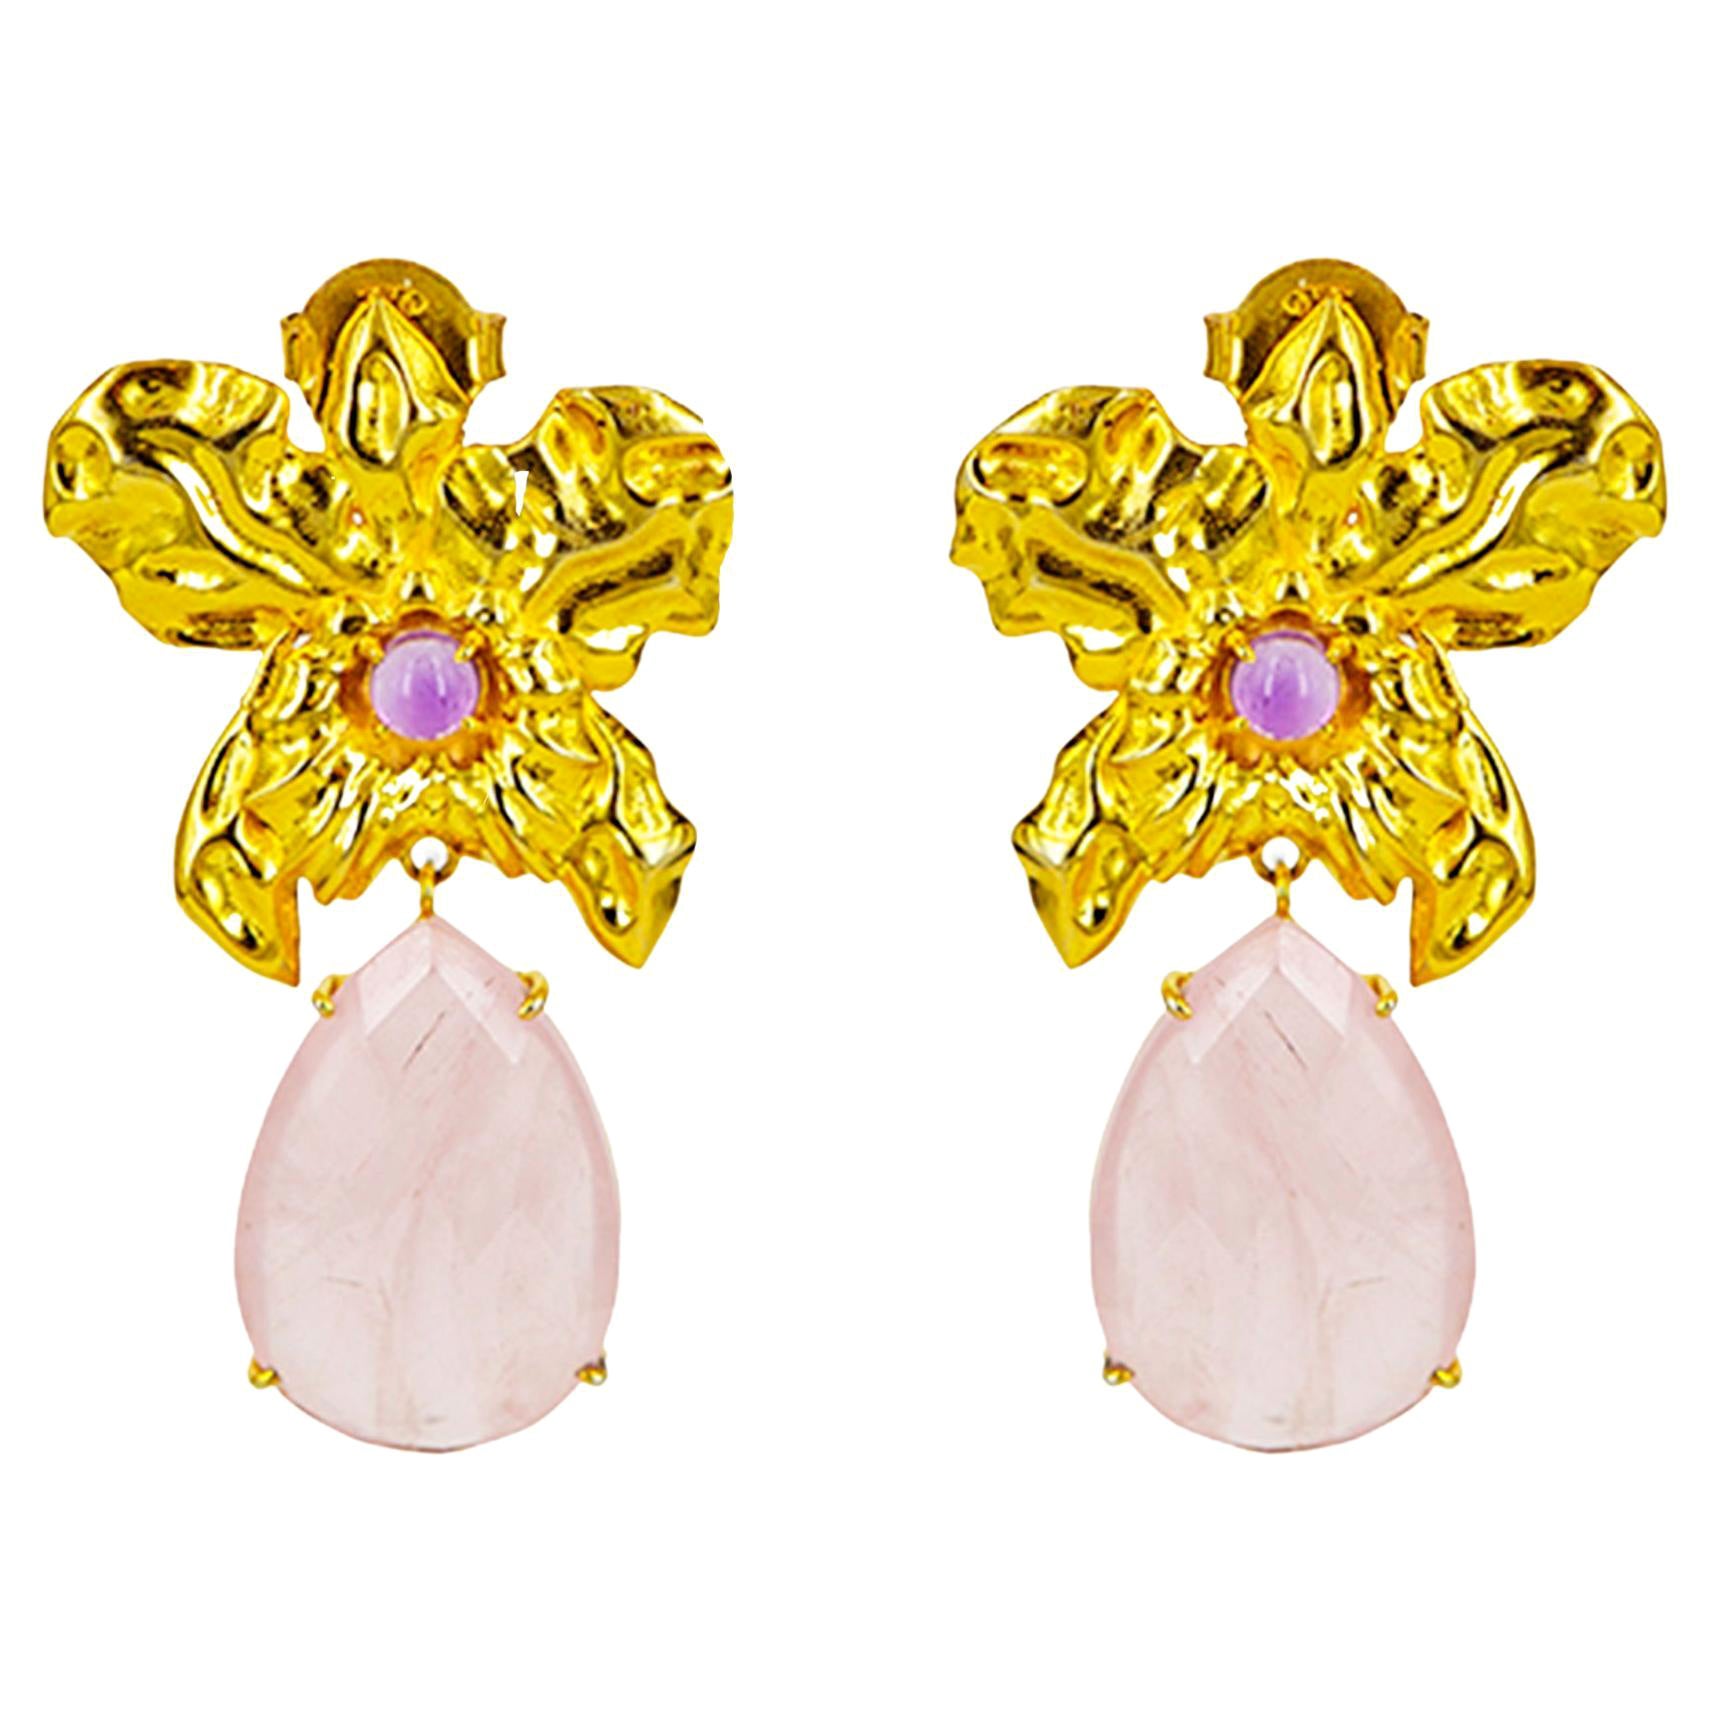 9K Gold Rose Quartz and Amethyst Flower Statement Earrings with Screw Backs